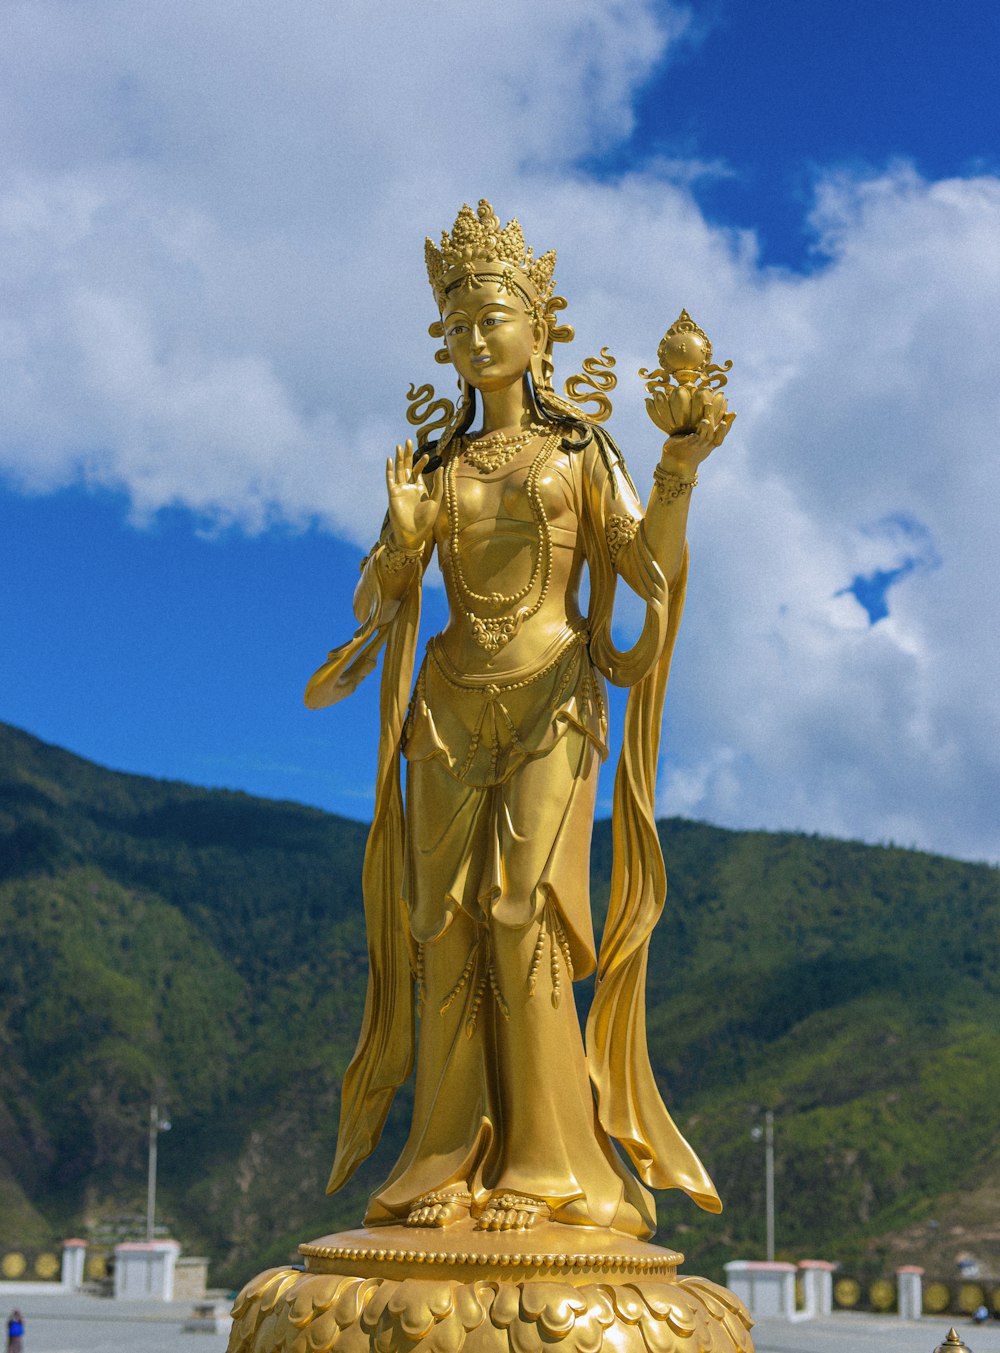 a golden statue of a woman holding a flower